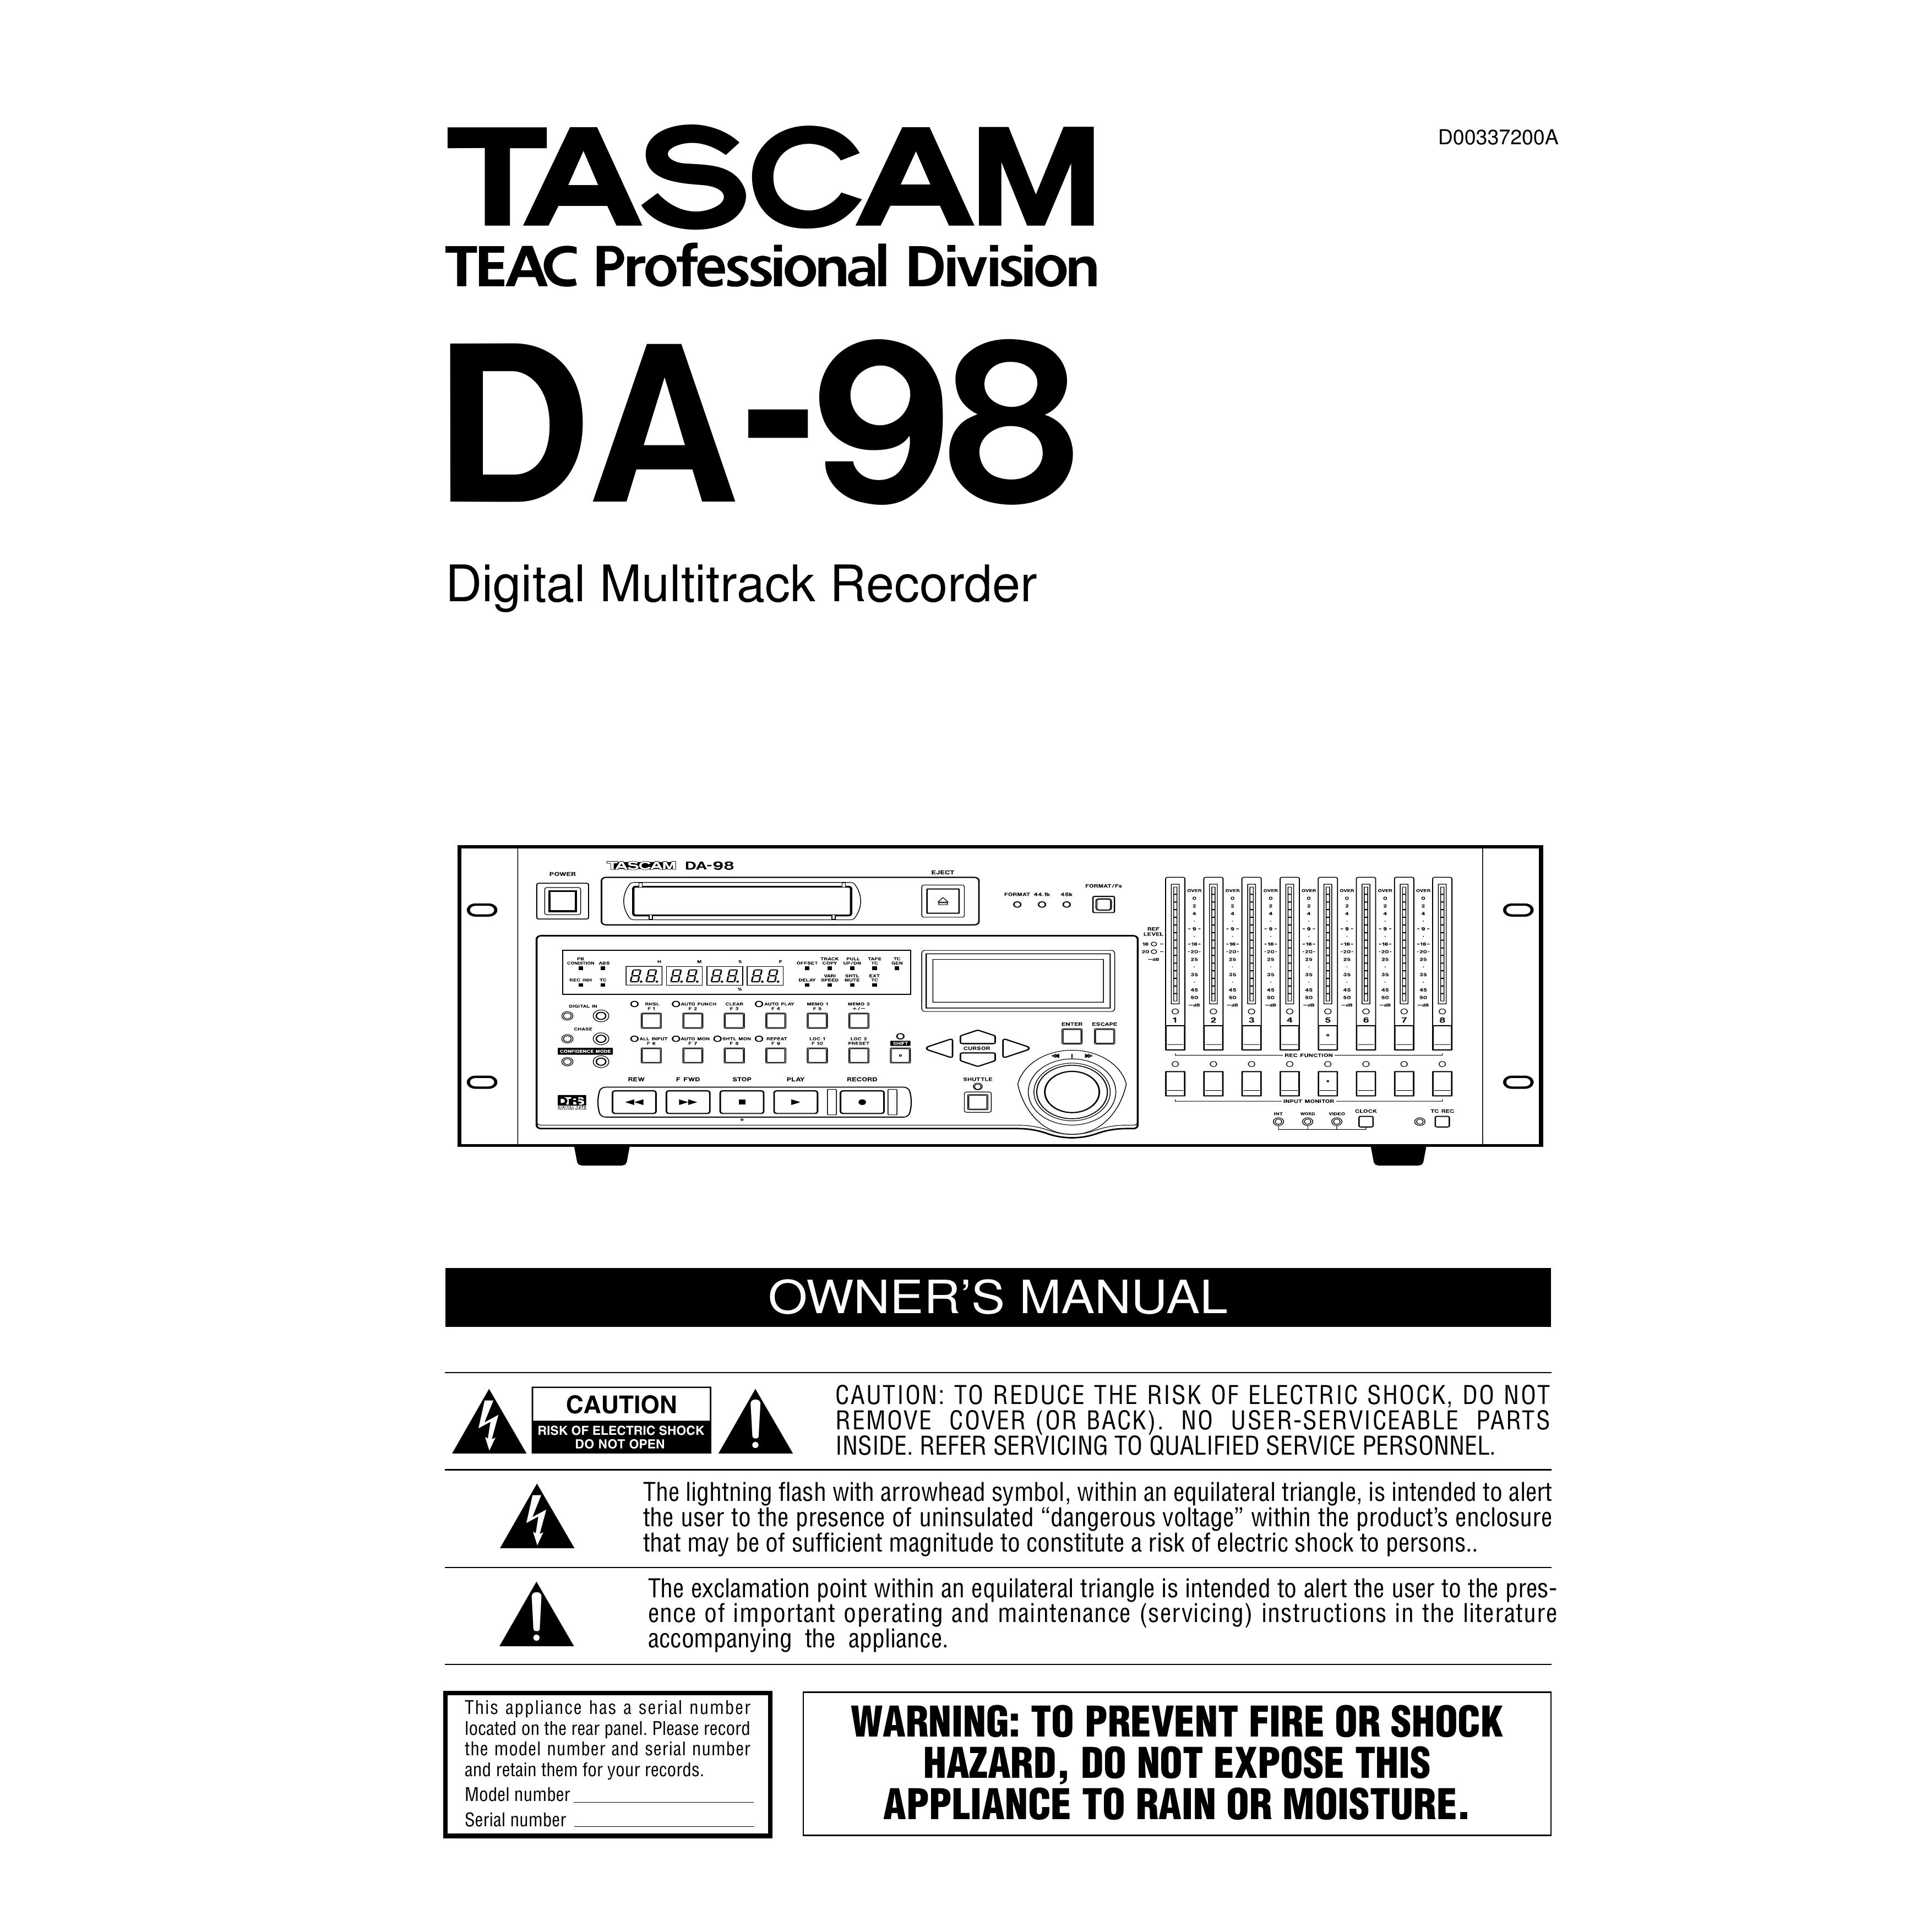 Kolpak DA-98 Recording Equipment User Manual